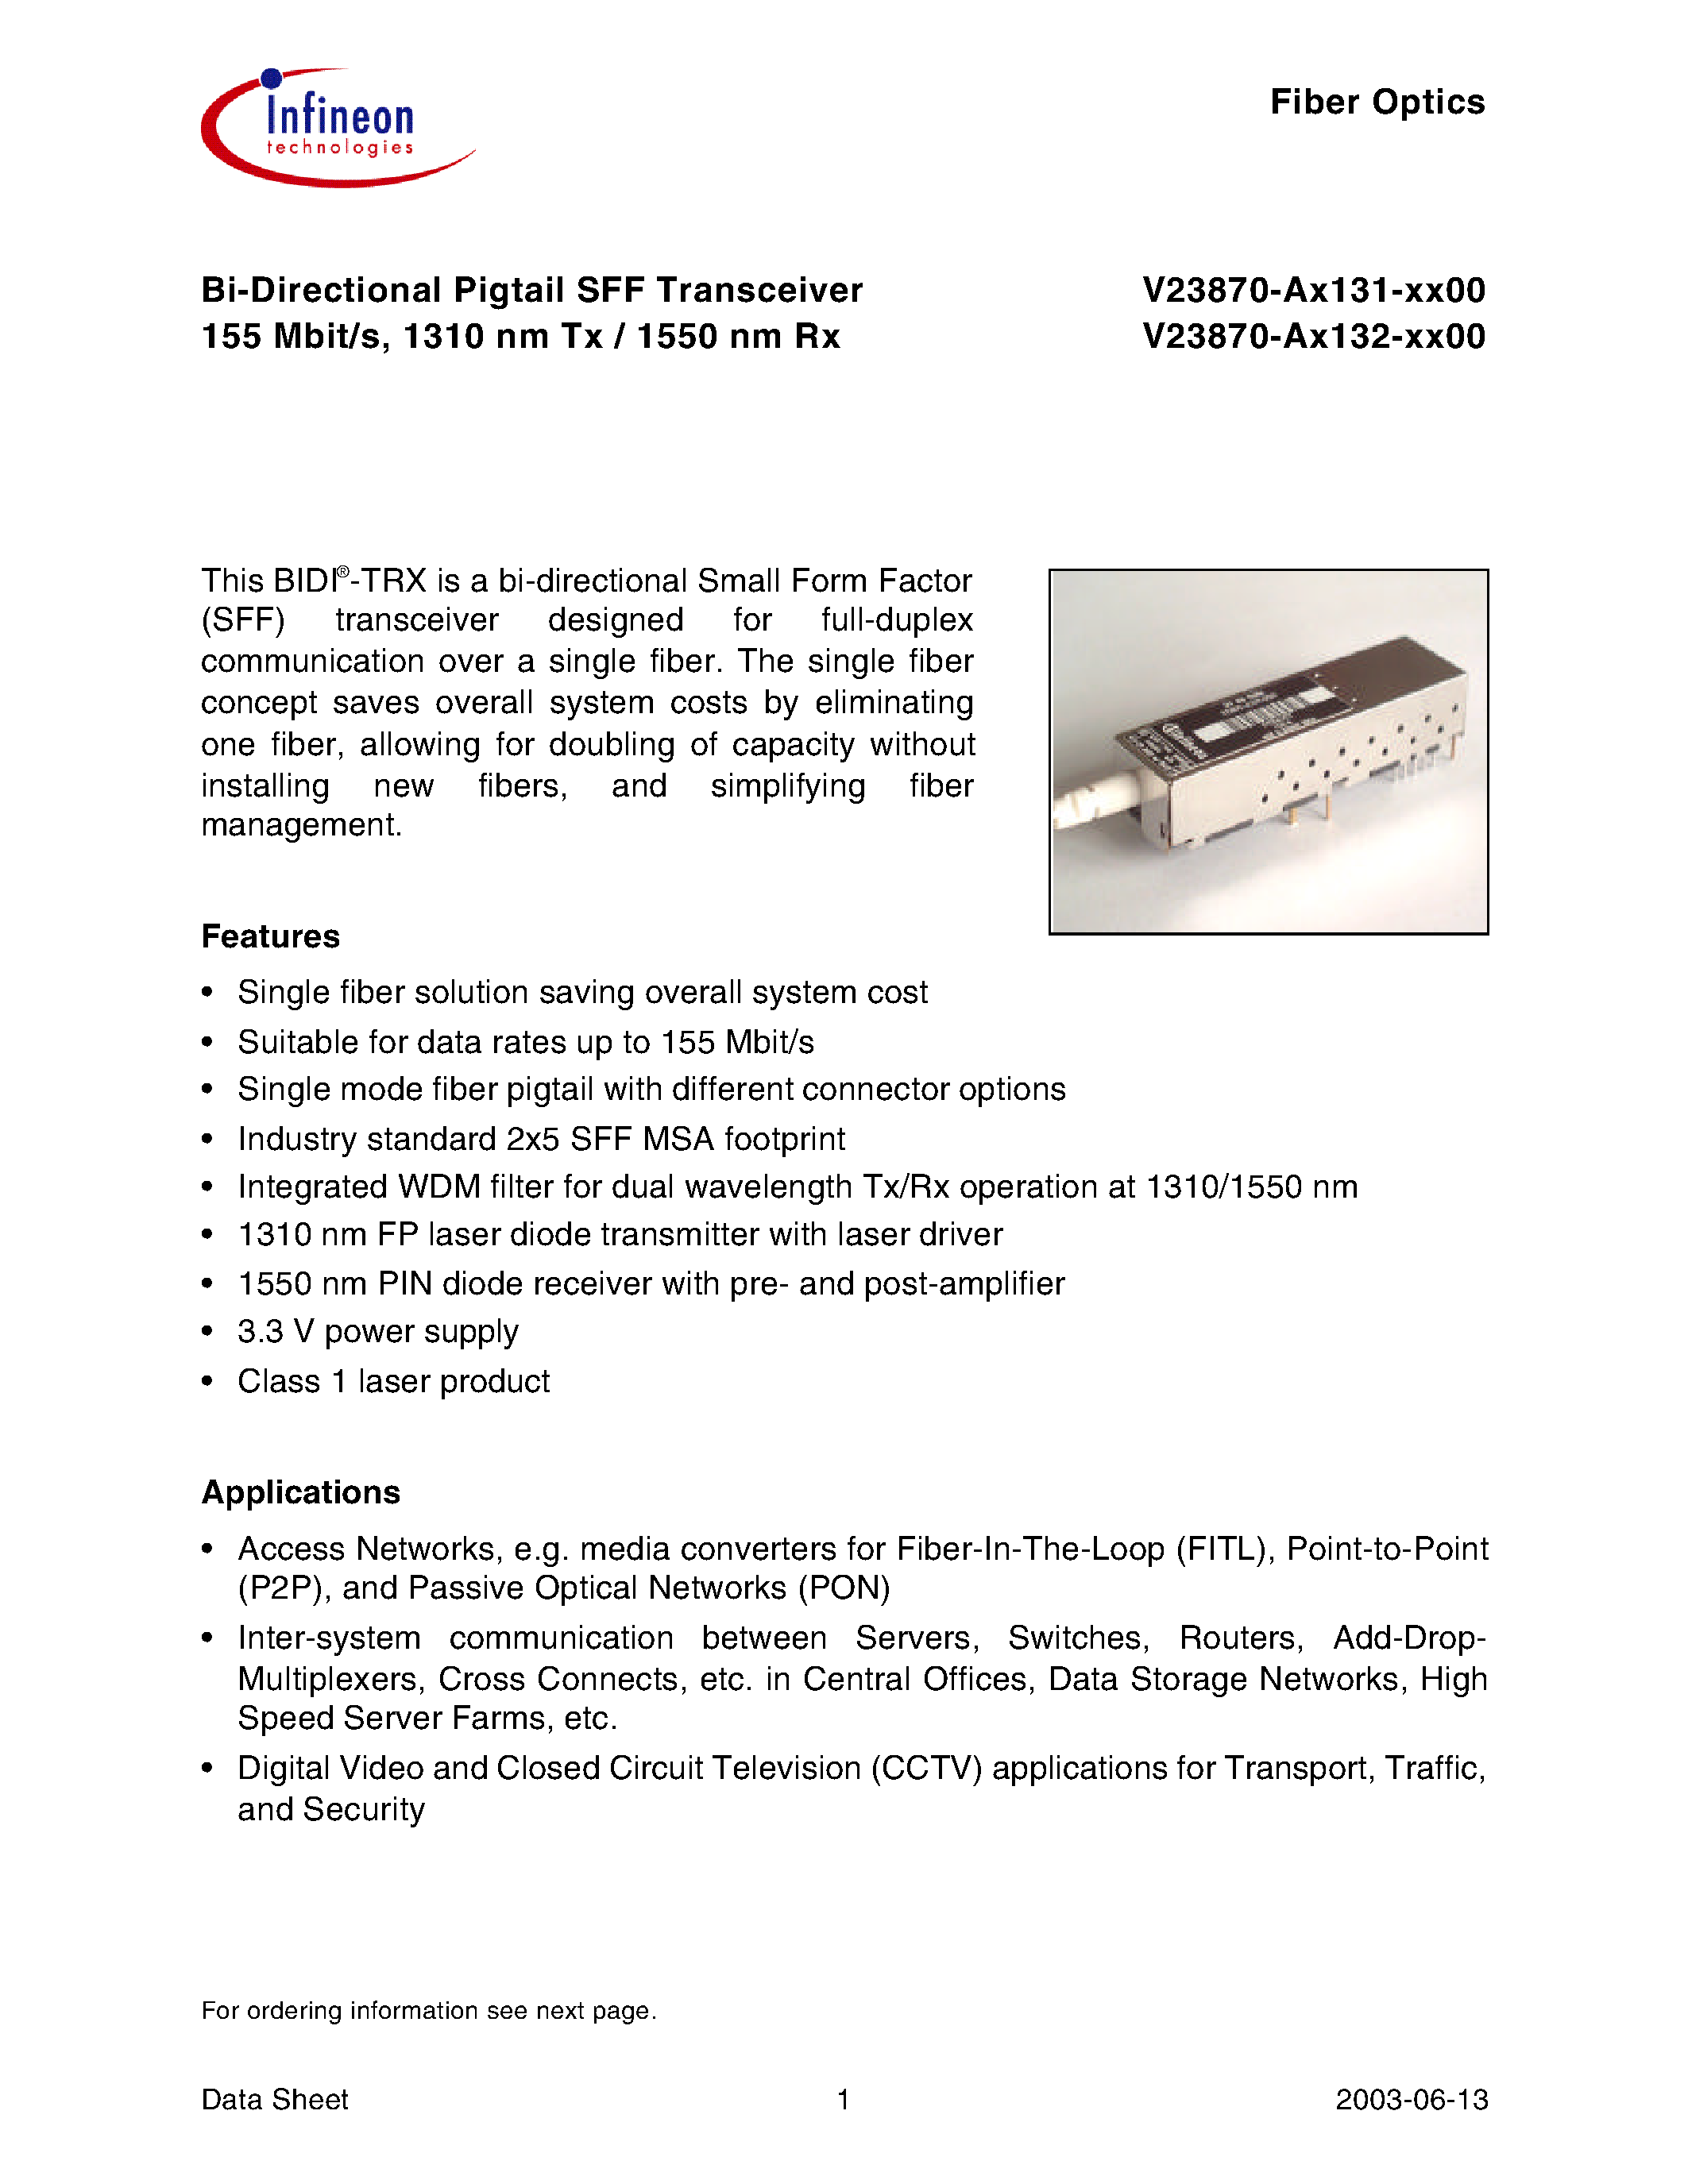 Даташит V23870-A3131-C200 - Bi-Directional Pigtail SFF Transceiver 155 Mbit/s/ 1310 nm Tx / 1550 nm Rx страница 1